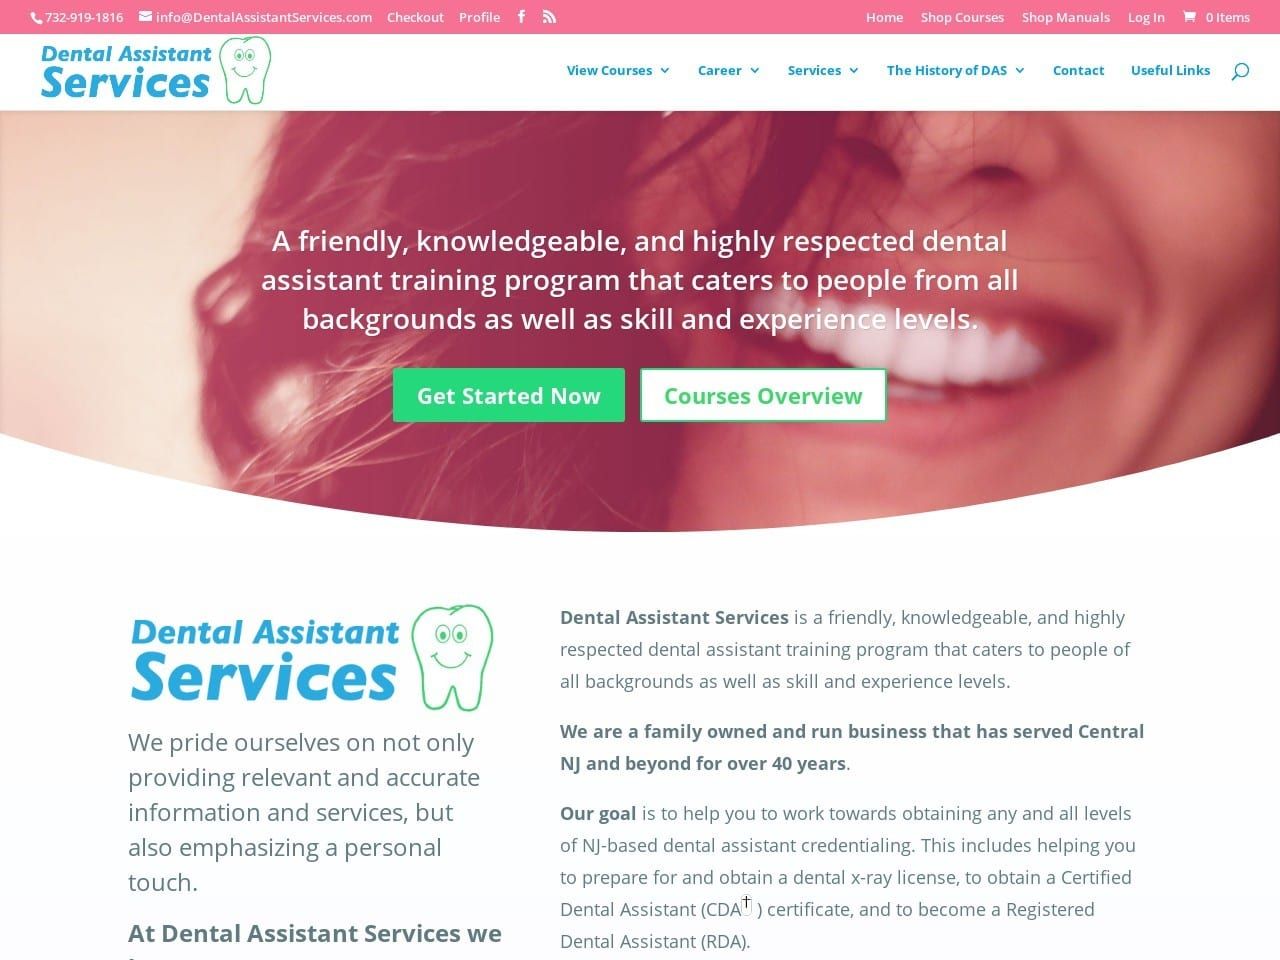 Dental Assistant Services Website Screenshot from dentalassistantservices.com